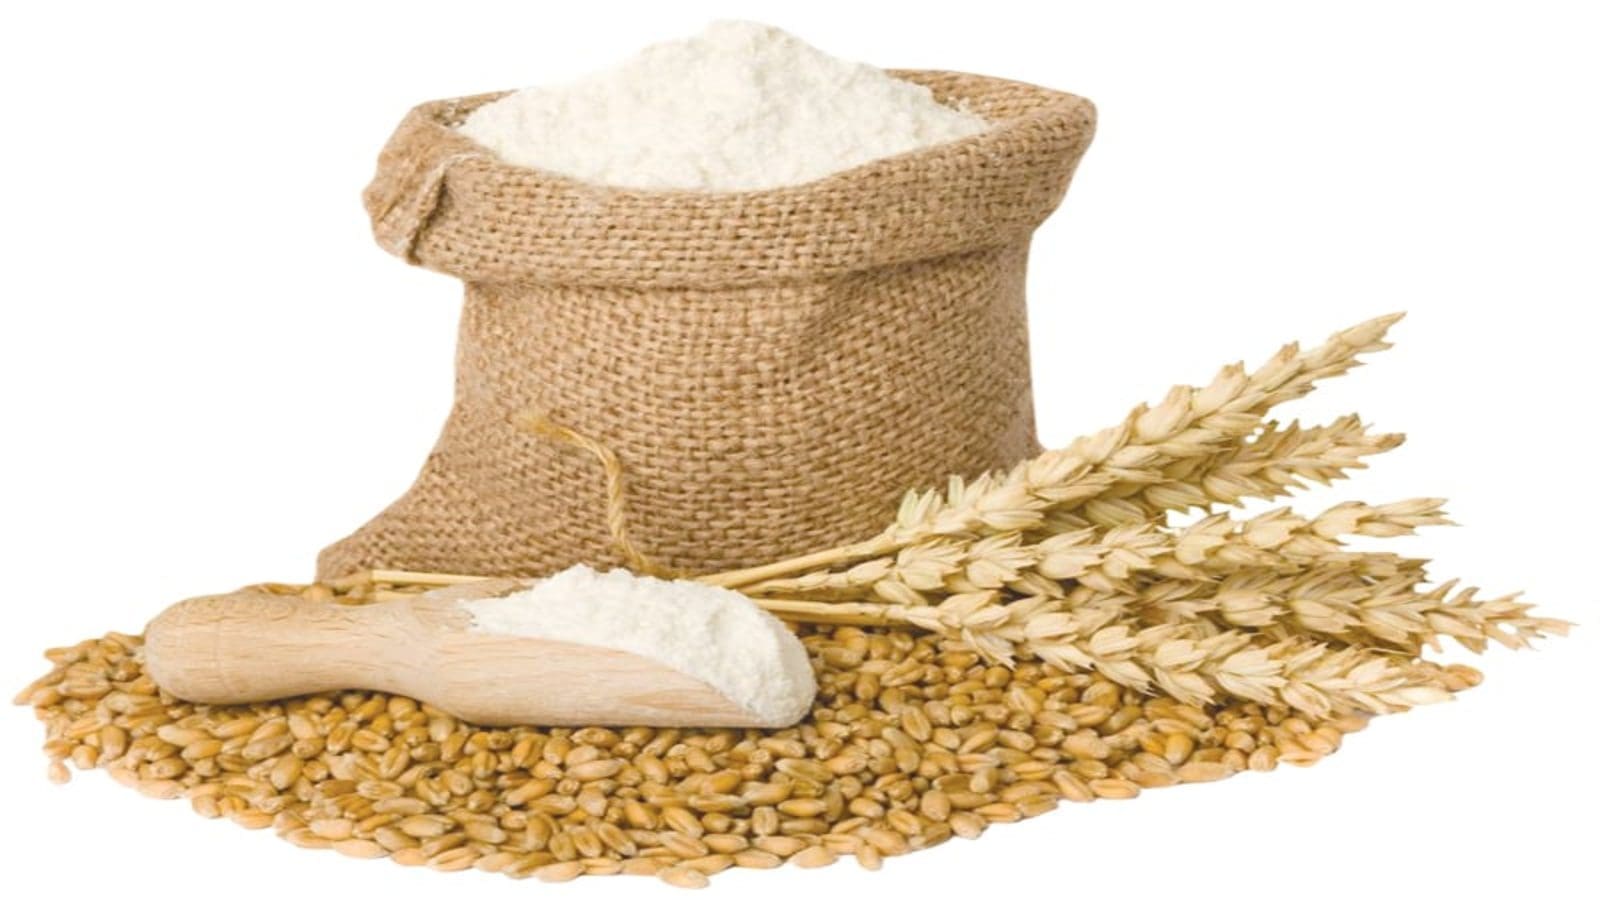 Sudan receives 14600 tonnes of wheat under the Grain from Ukraine initiative